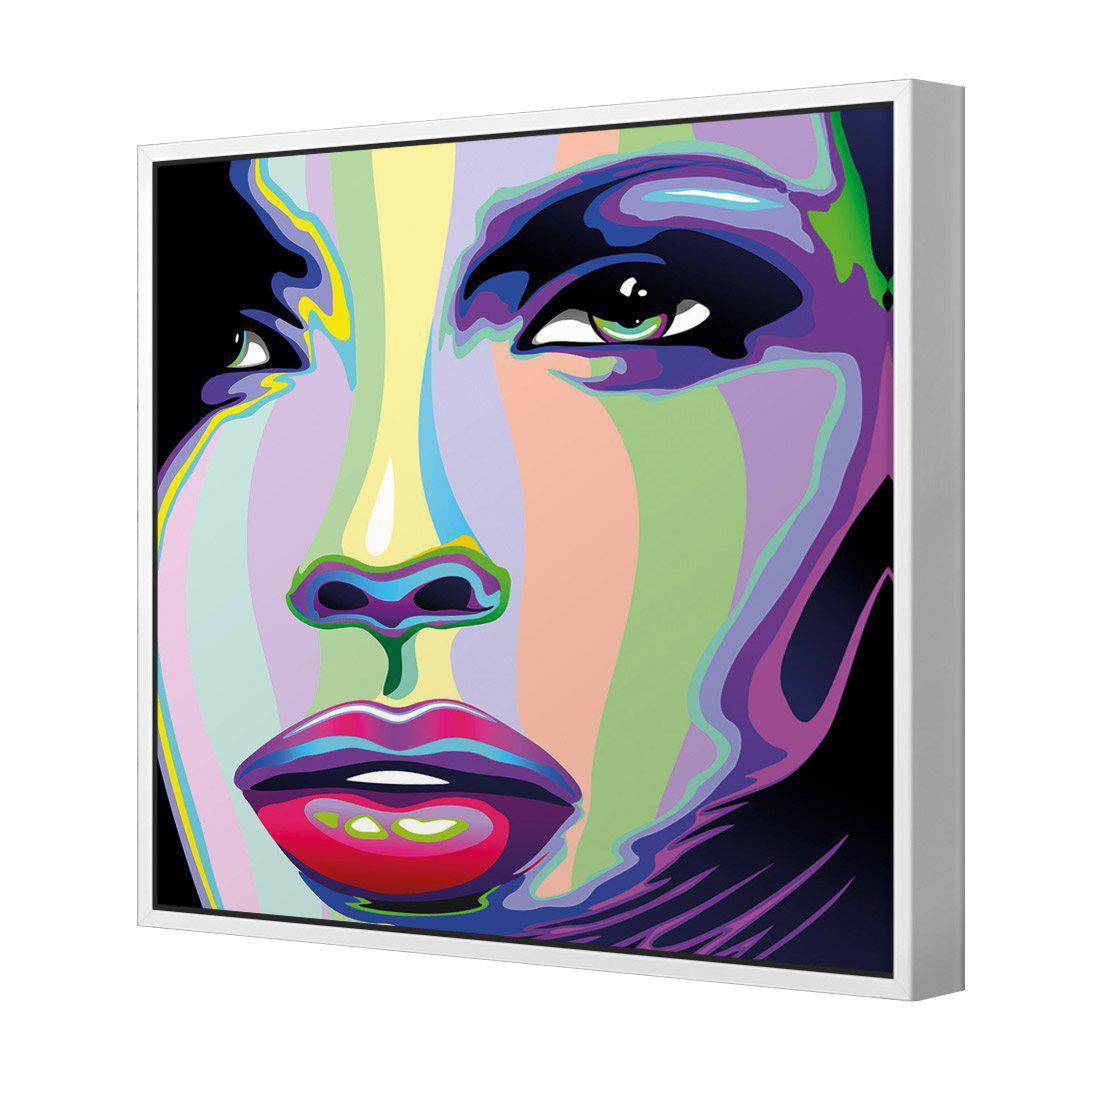 Electric Face Canvas Art-Canvas-Wall Art Designs-30x30cm-Canvas - White Frame-Wall Art Designs